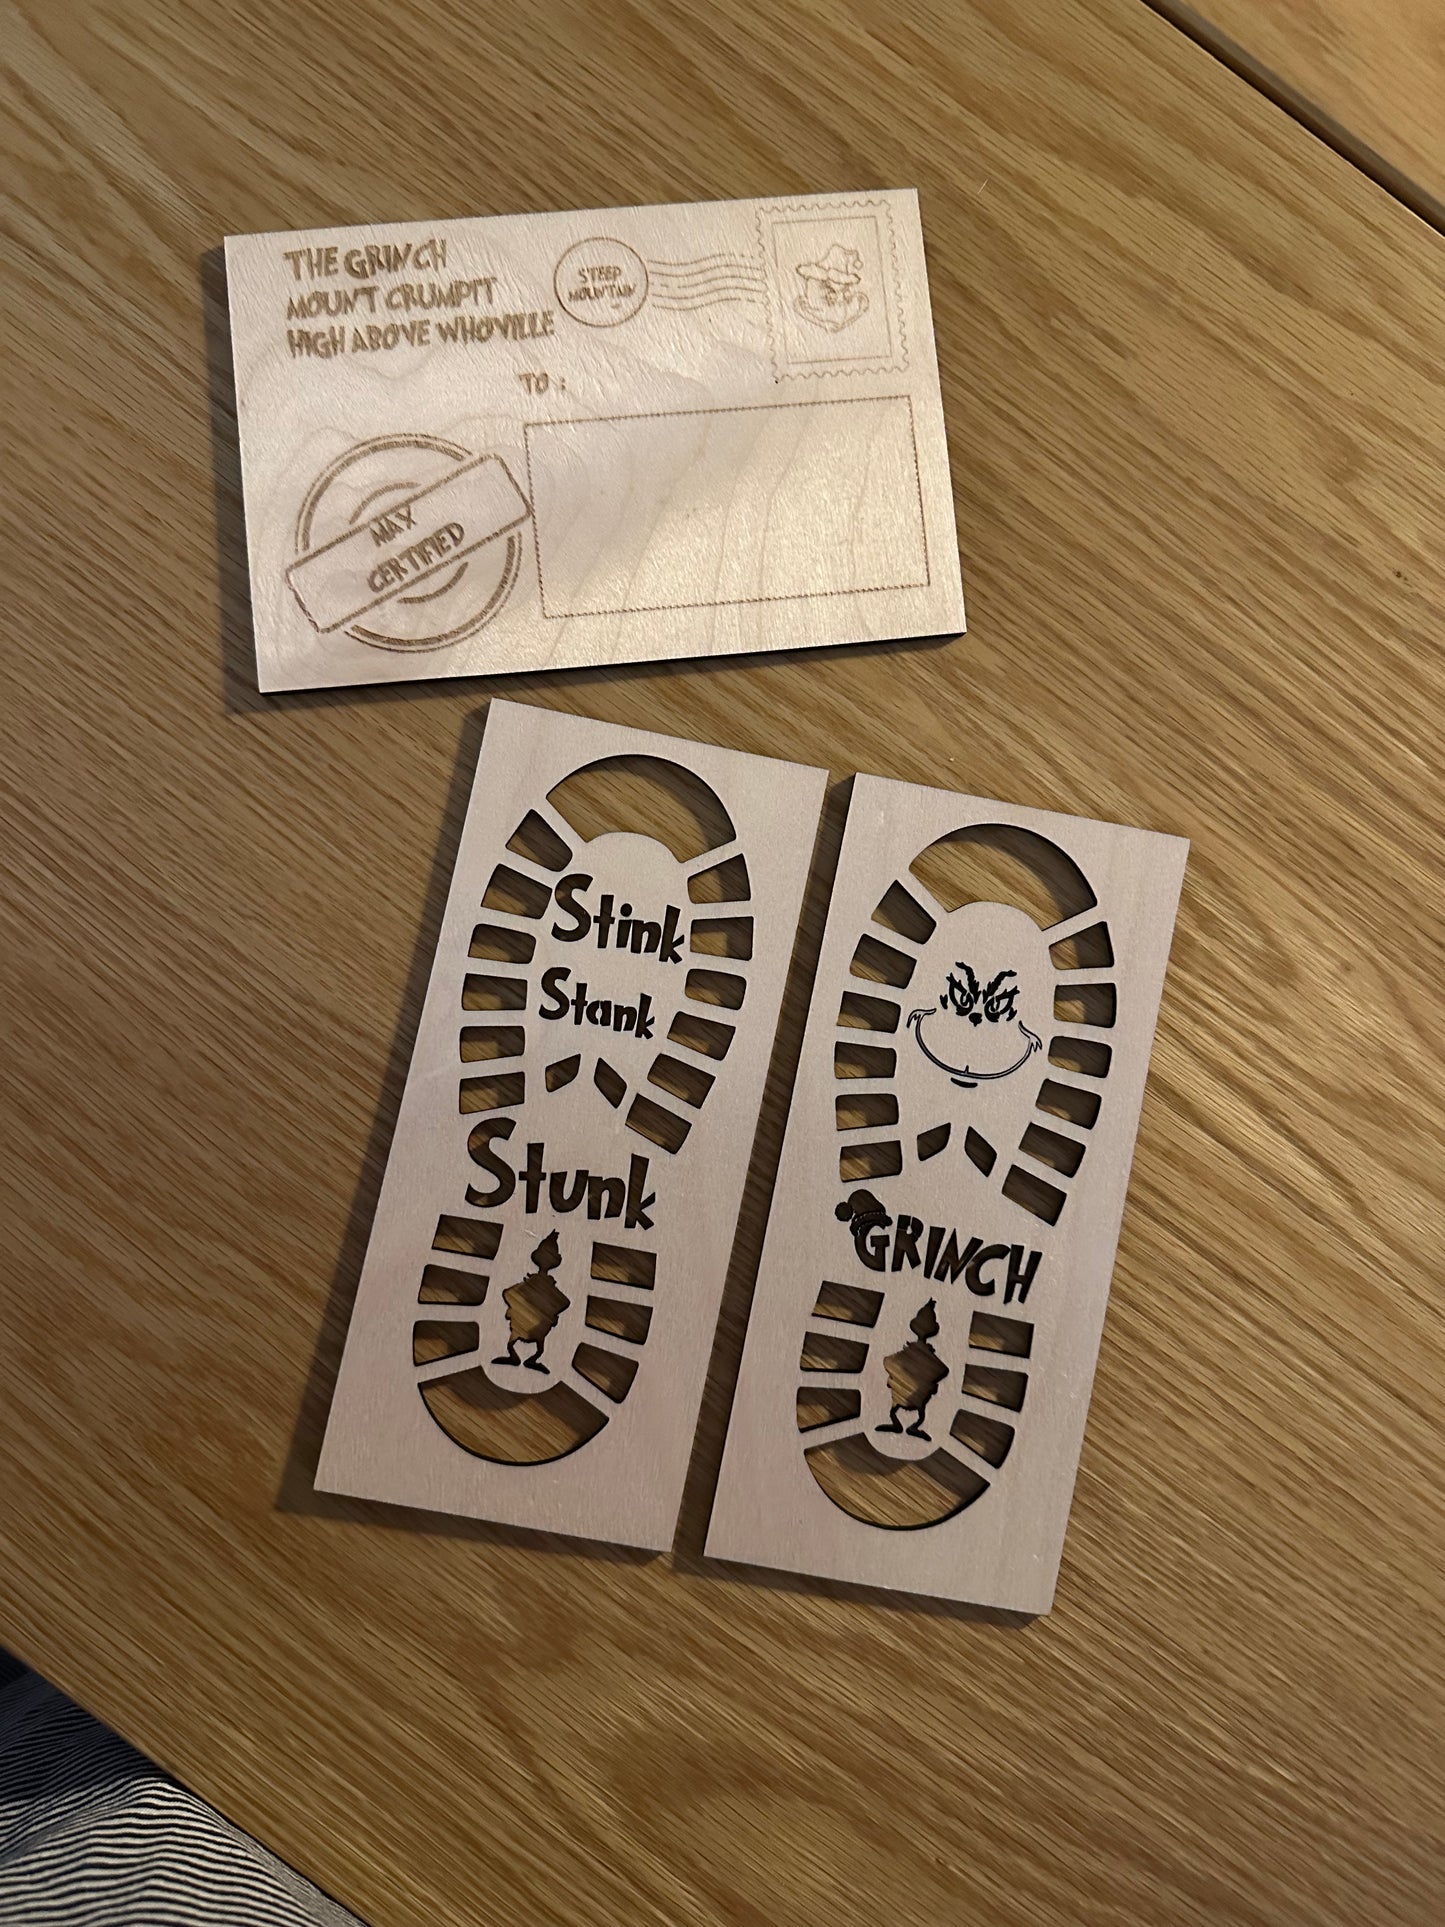 Grinch postcard and footprint stencils